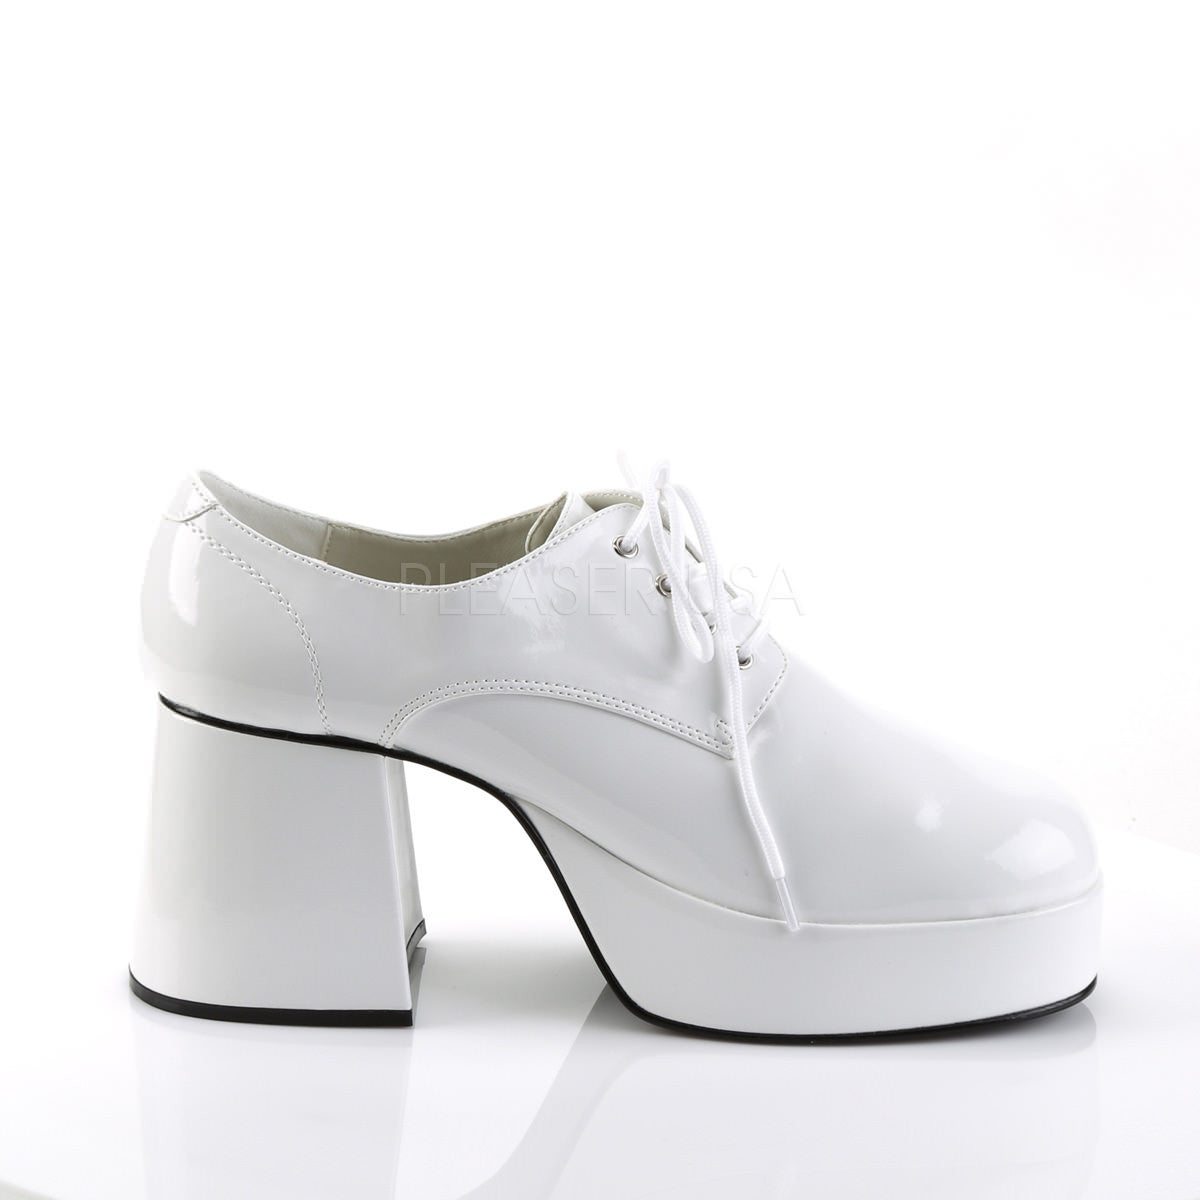 JAZZ-02 White Patent Platform Shoes